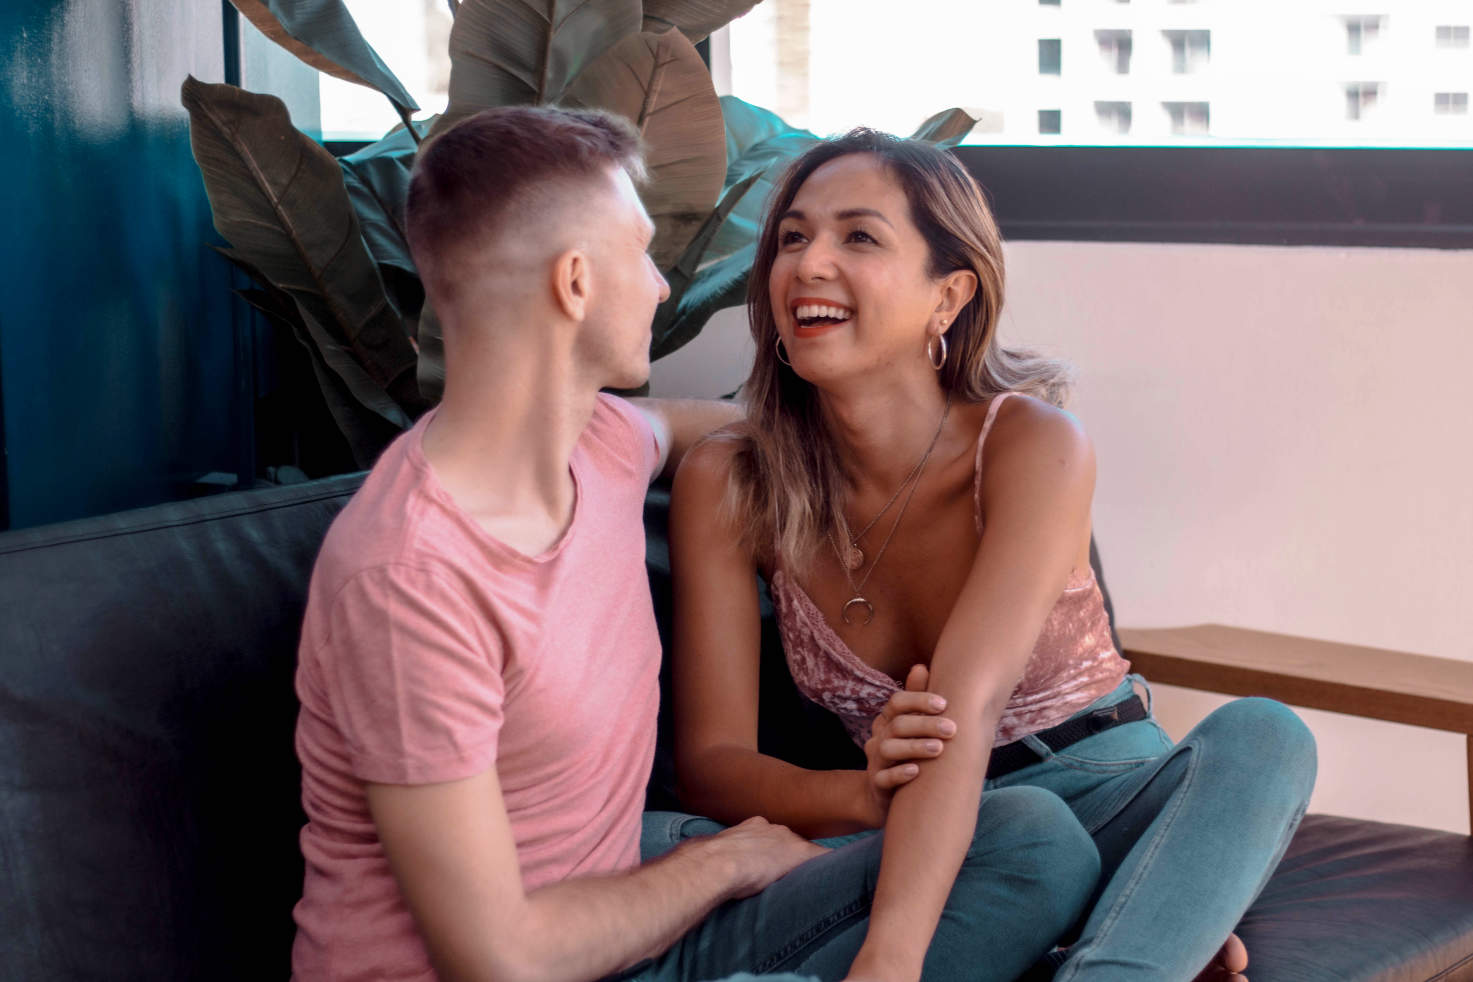 Transexual dating australia